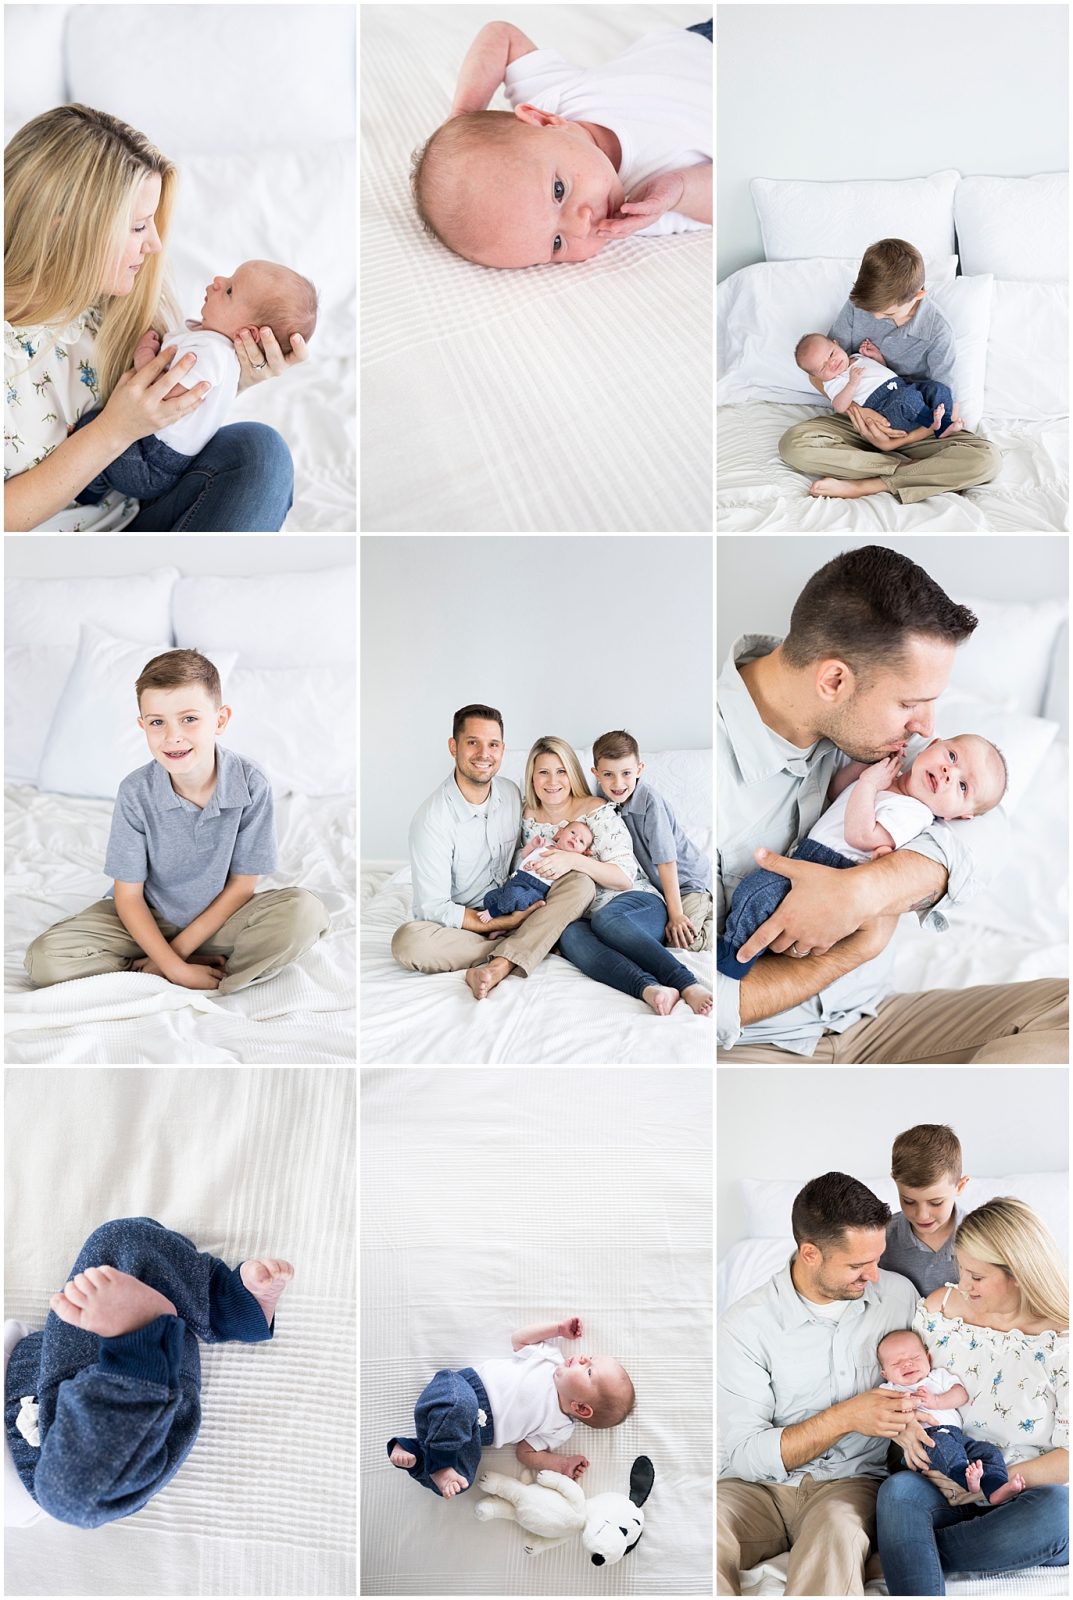 Simple family newborn session in studio on white bedding